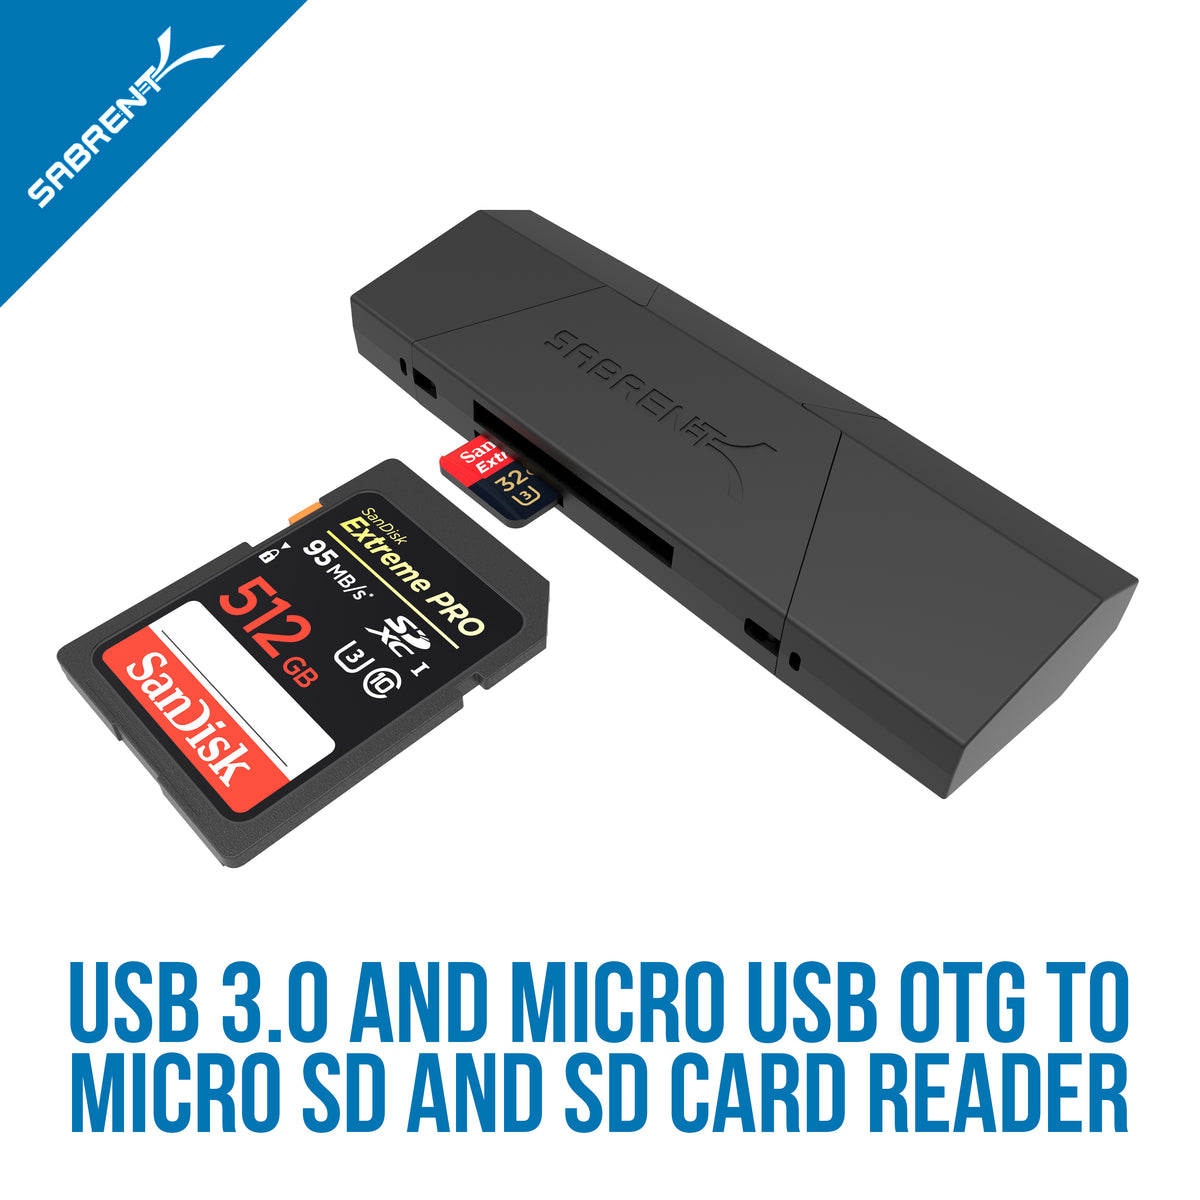 2-Slot Micro USB OTG and USB 3.0 Flash Memory Card Reader - Supports SD , SDHC , SDXC , MMC / MicroSD , T-Flash [Black]